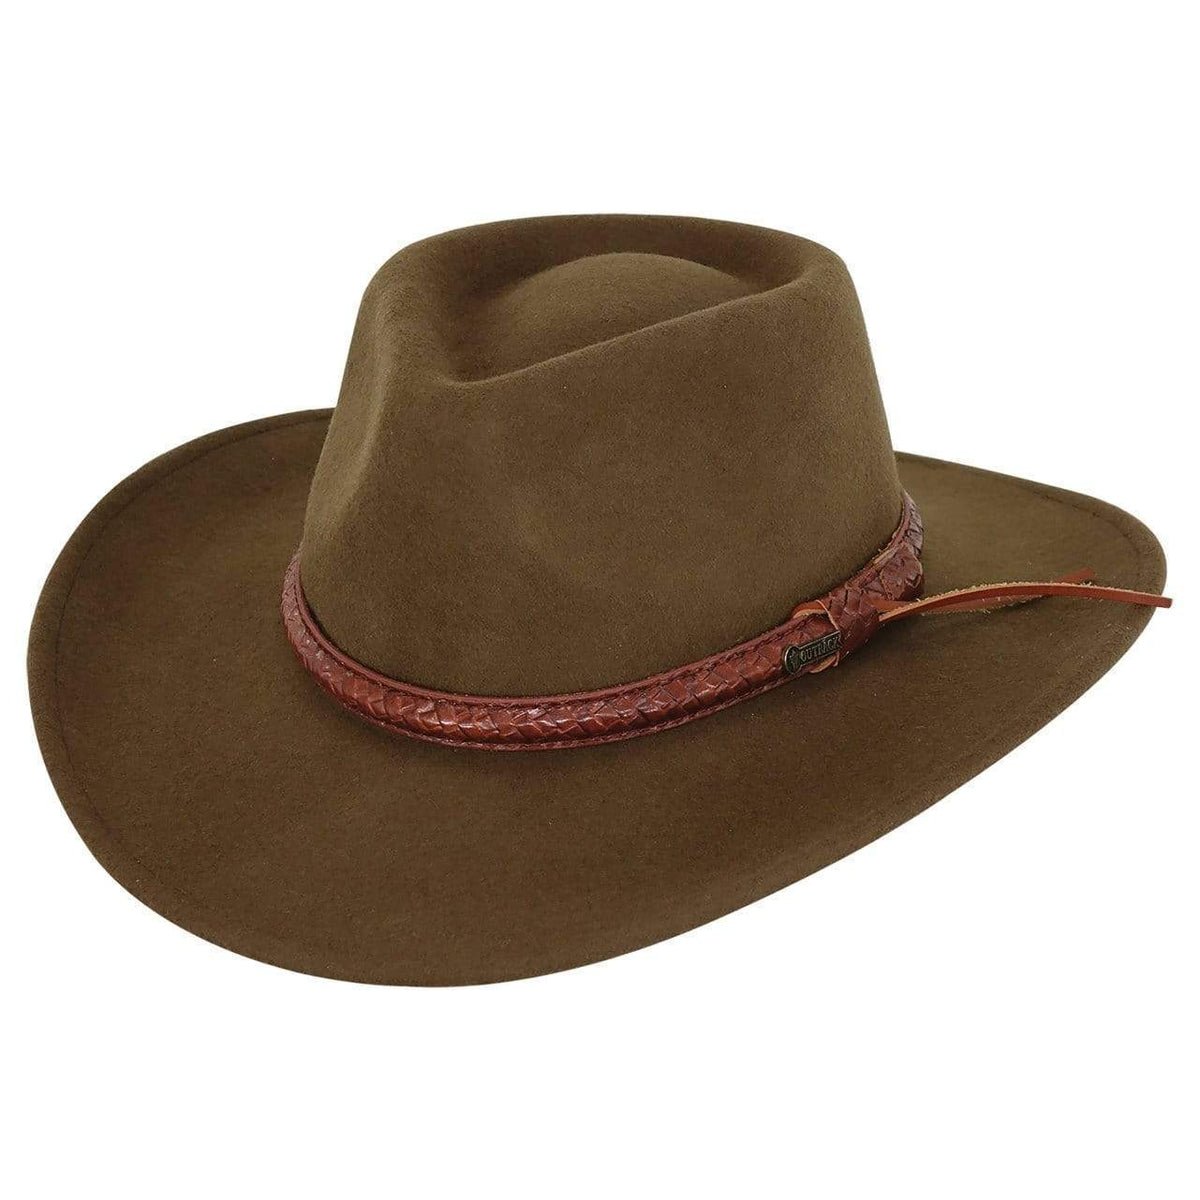 The Territory Ahead Outback Wool Felt Hat by Pendleton - Brown / Medium